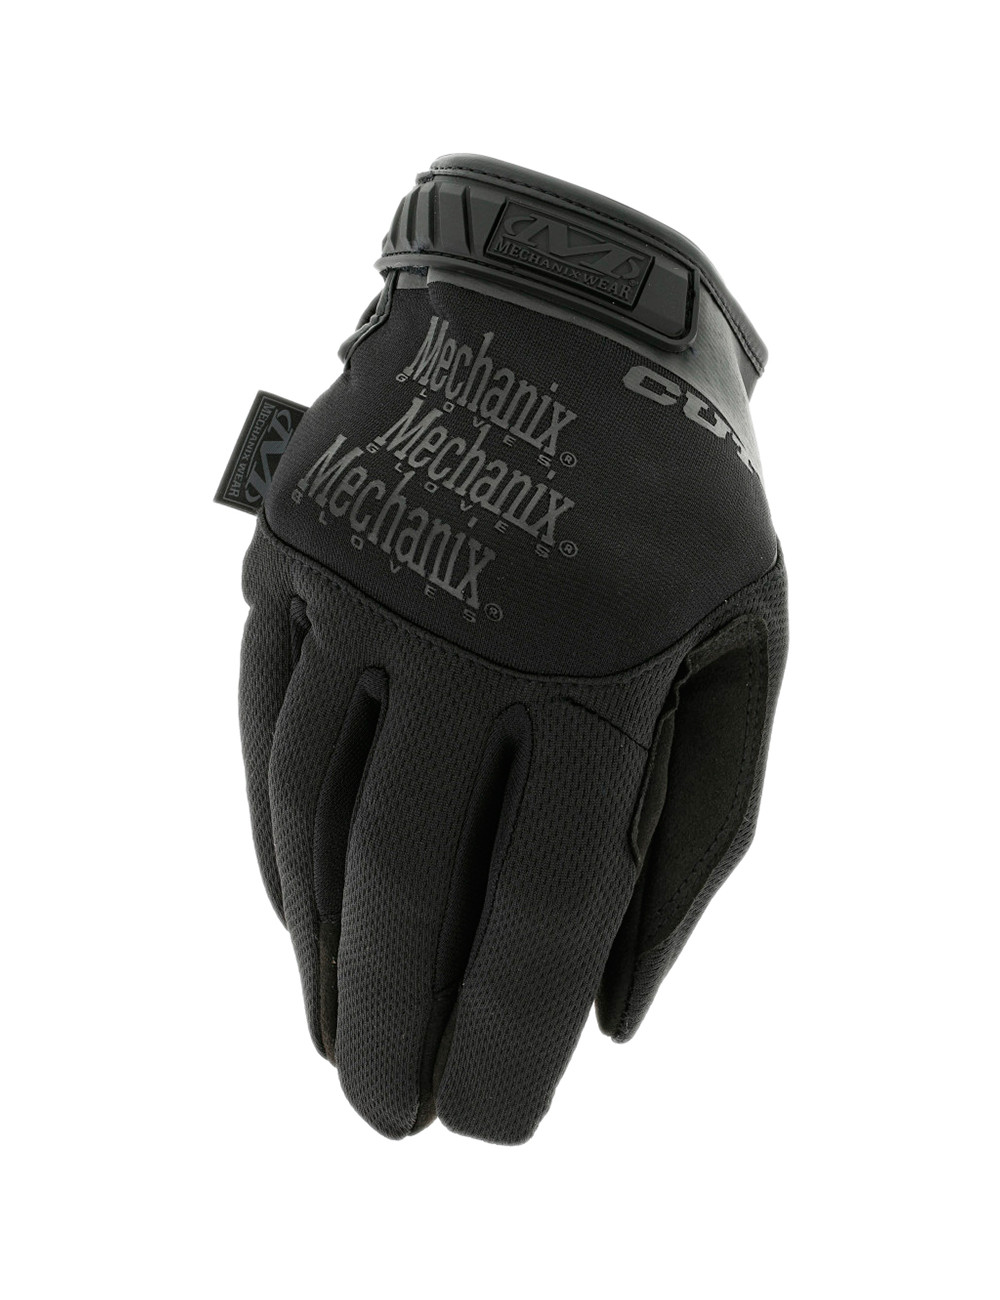 MECHANIX TSCR-55-011 Pursuit D5 Gloves XL